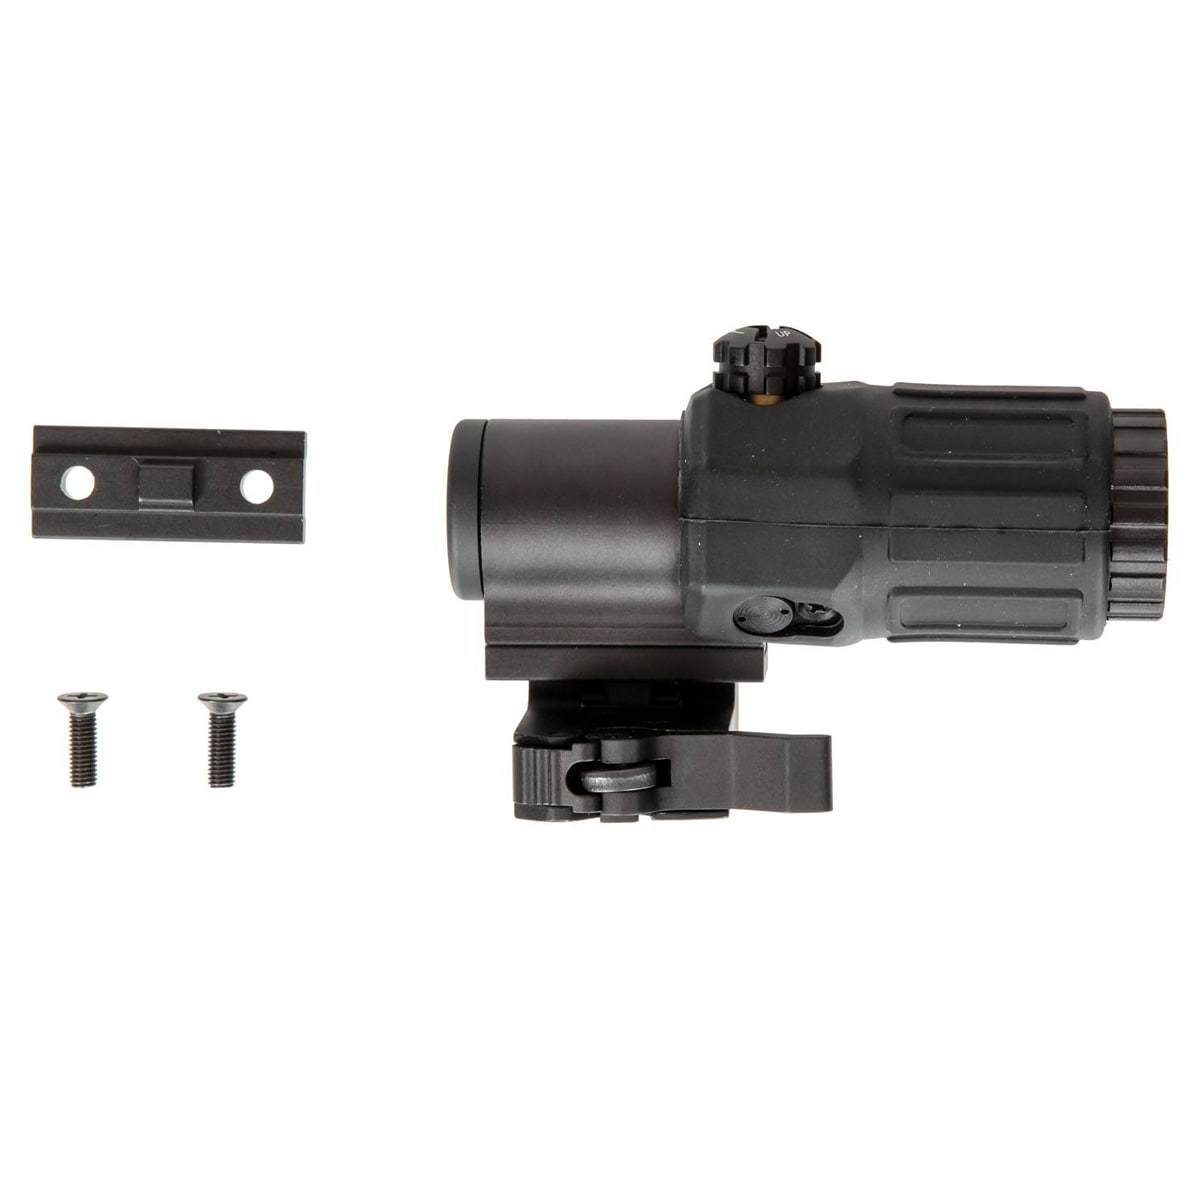 Luneta typu magnifier JJ Airsoft 3x z osłoną Killflash - Black